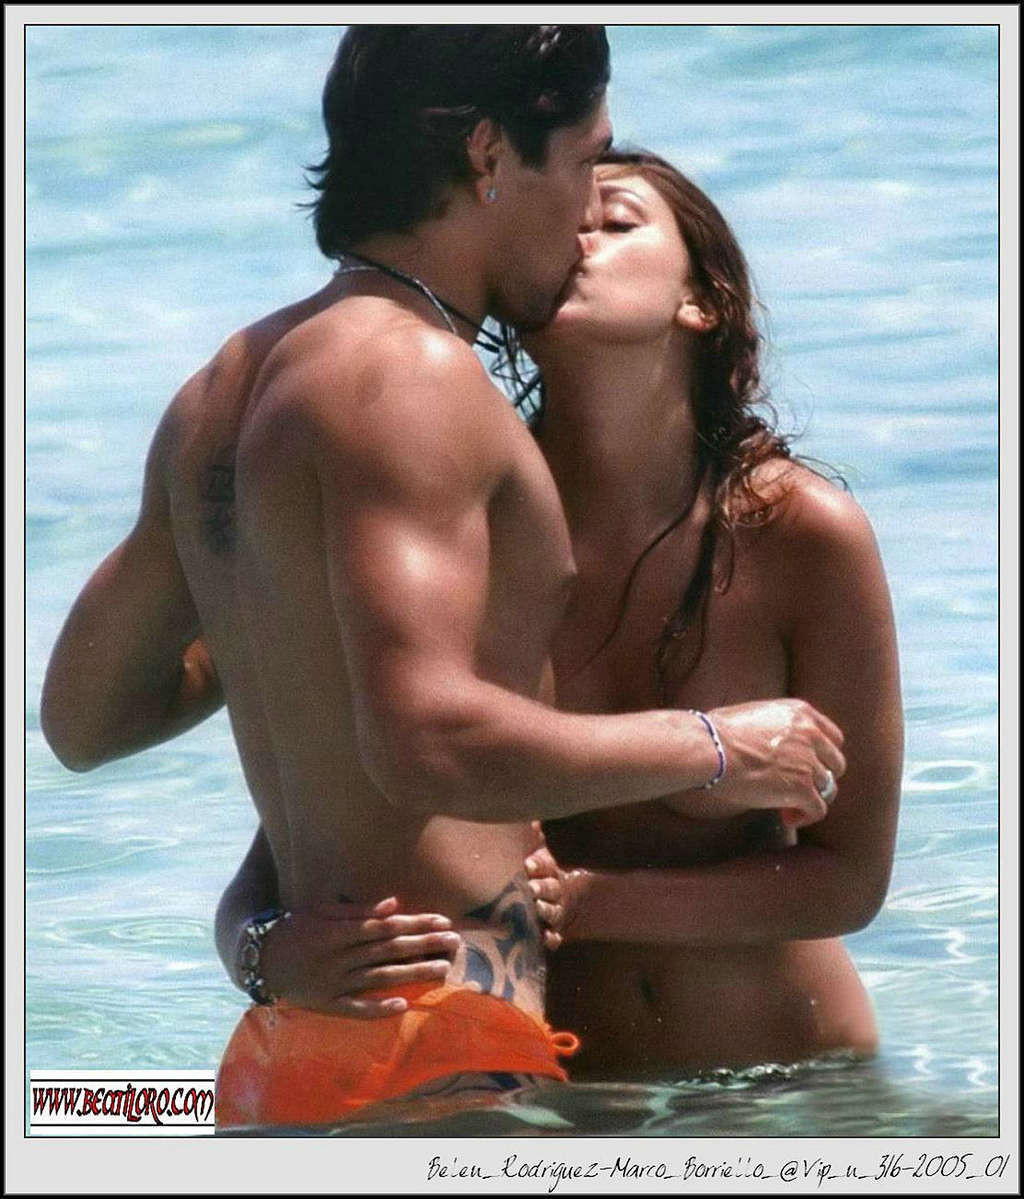 Belen Rodriguez enjoying with her boyfriend on beach in topless #75353408